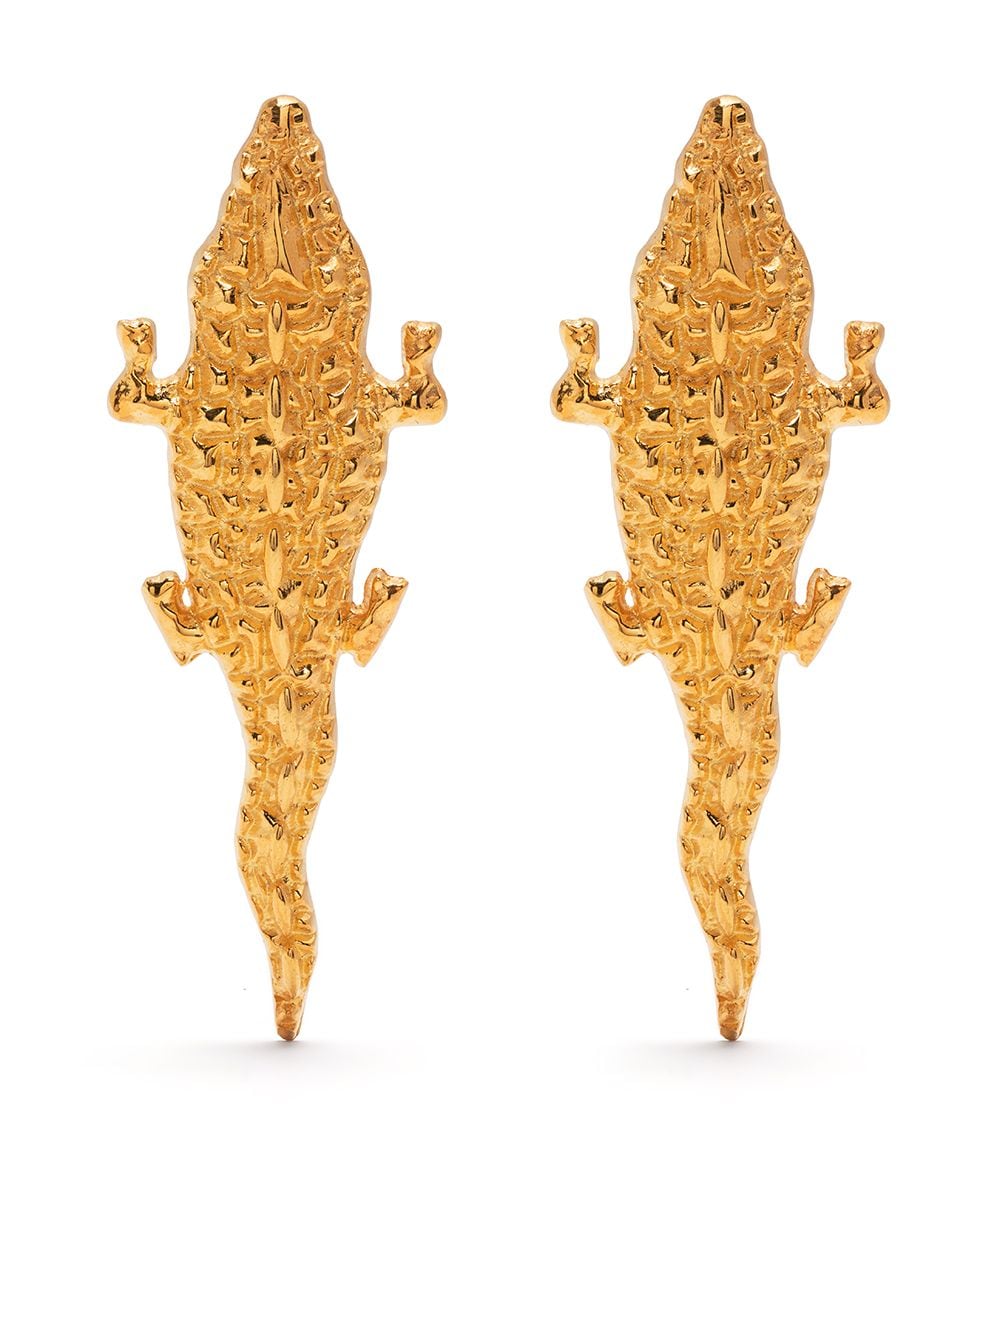 Crocodile earrings